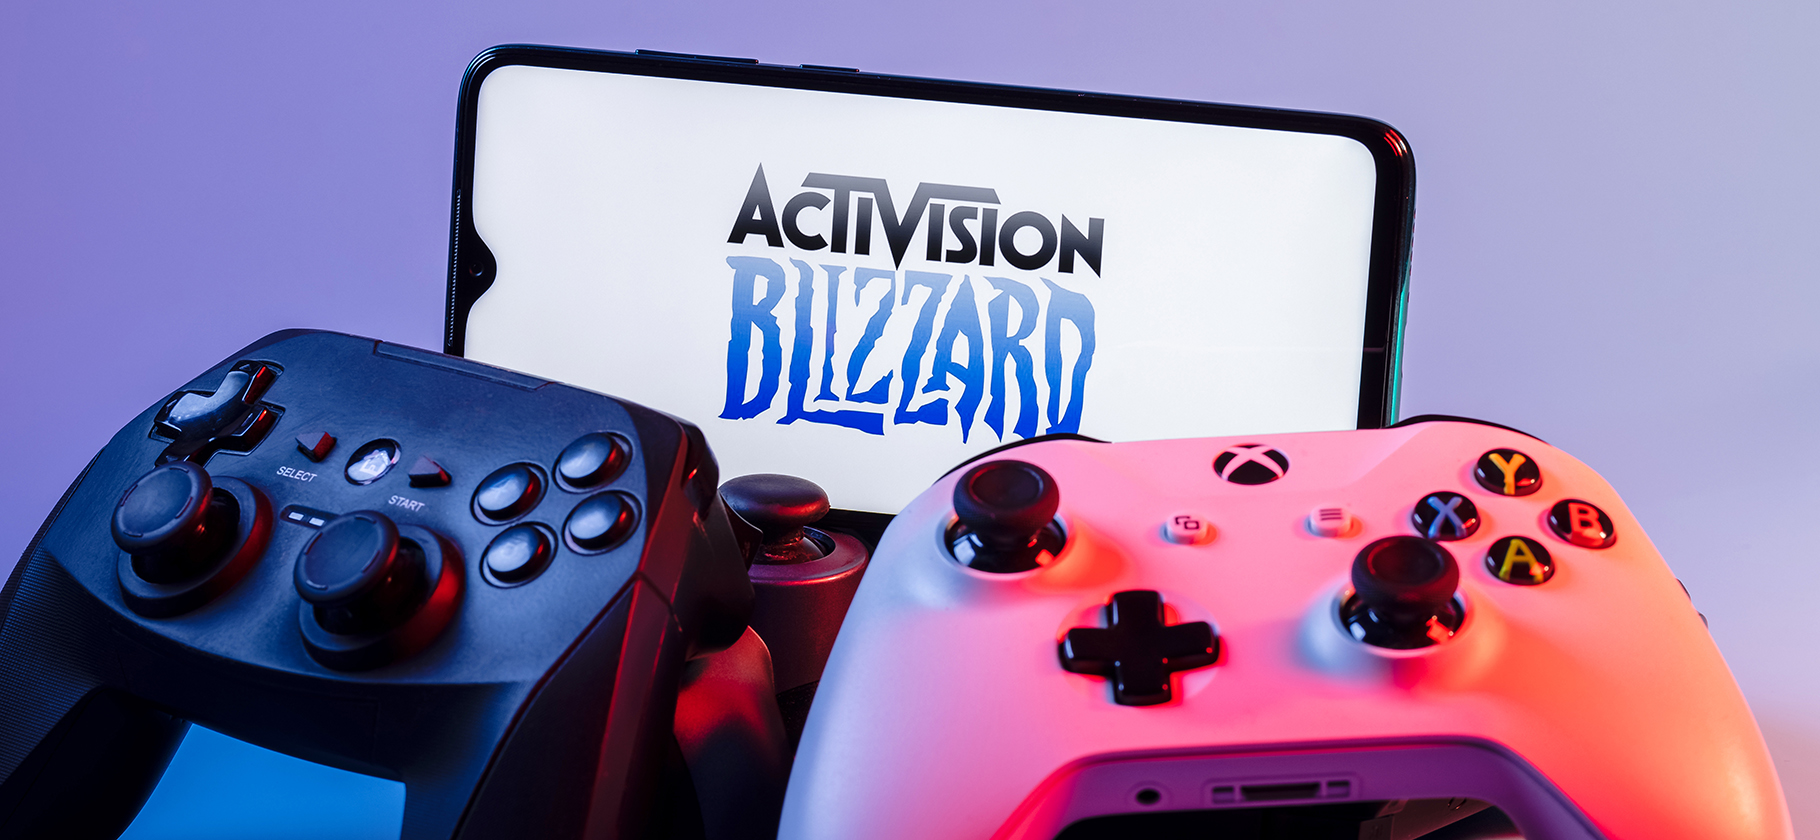 Microsoft купит Activision Blizzard за 68,7 млрд долларов. Акции последней выросли на 30%